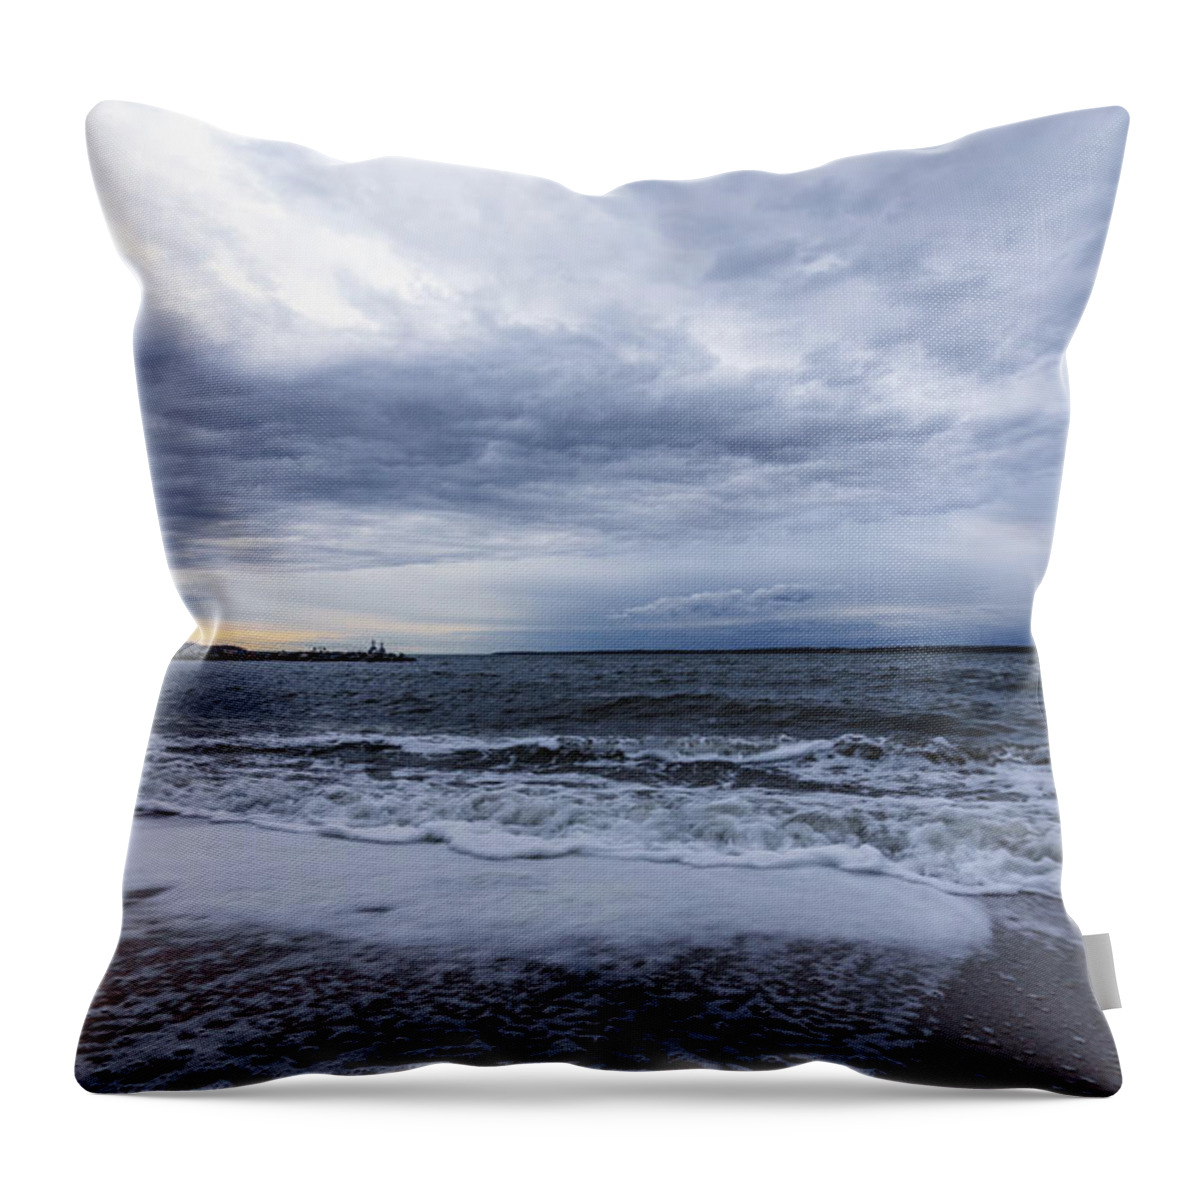 Yorktown Beach Throw Pillow featuring the photograph Stormy Weather at Yorktown Beach by Rachel Morrison